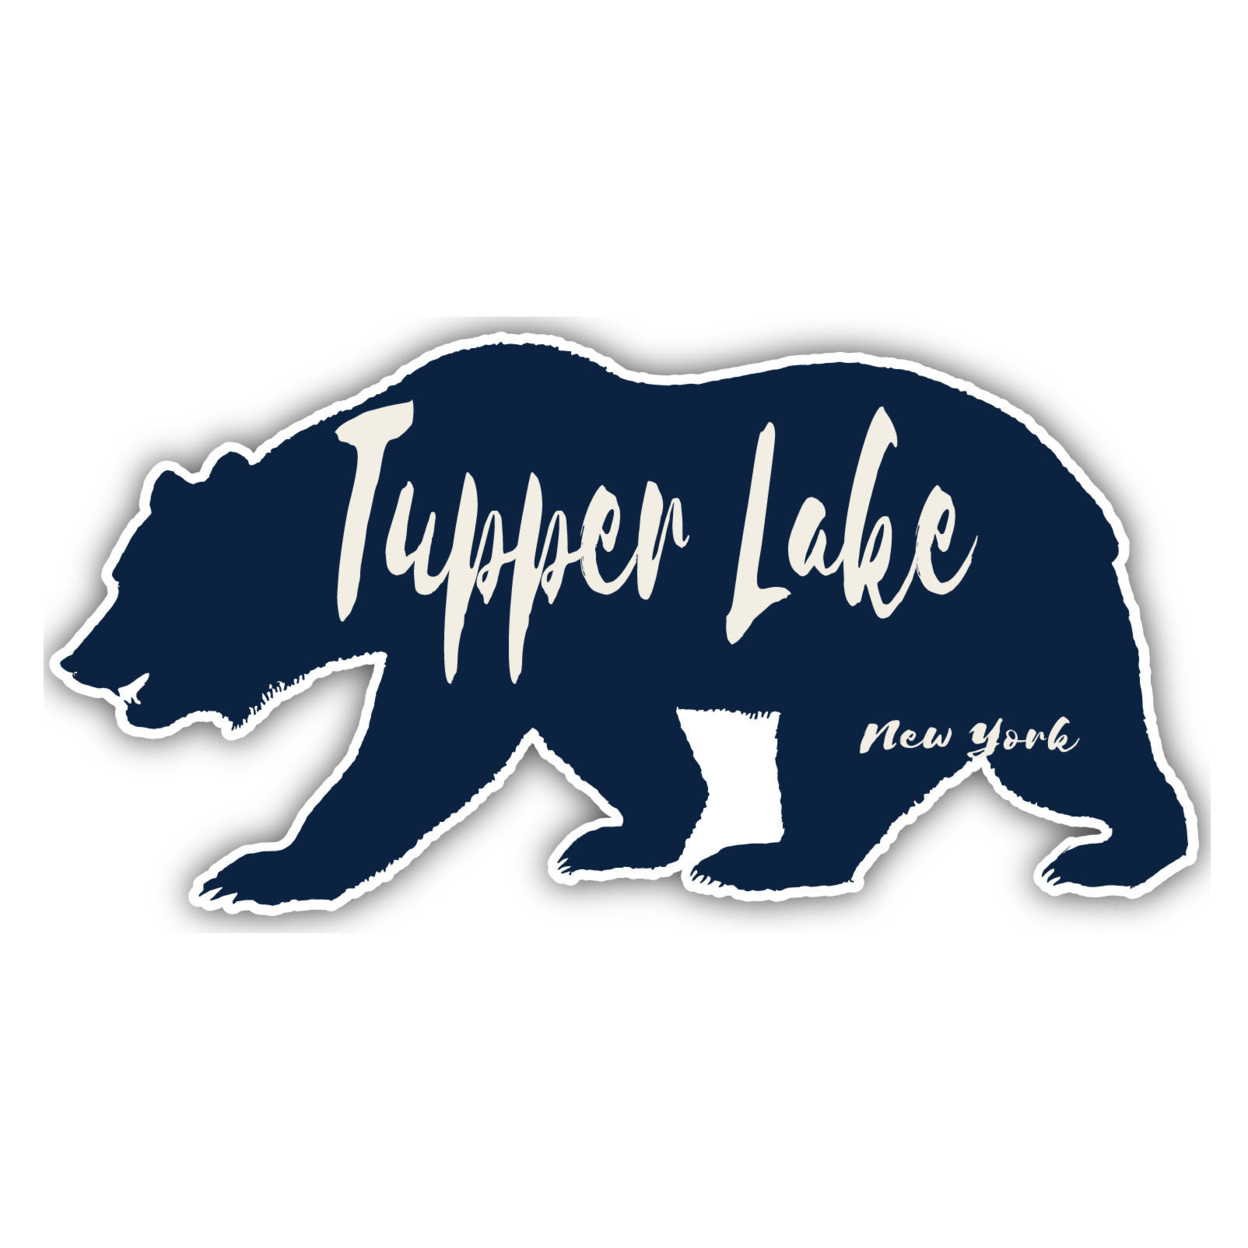 Tupper Lake New York Souvenir Decorative Stickers (Choose Theme And Size) - Single Unit, 4-Inch, Tent